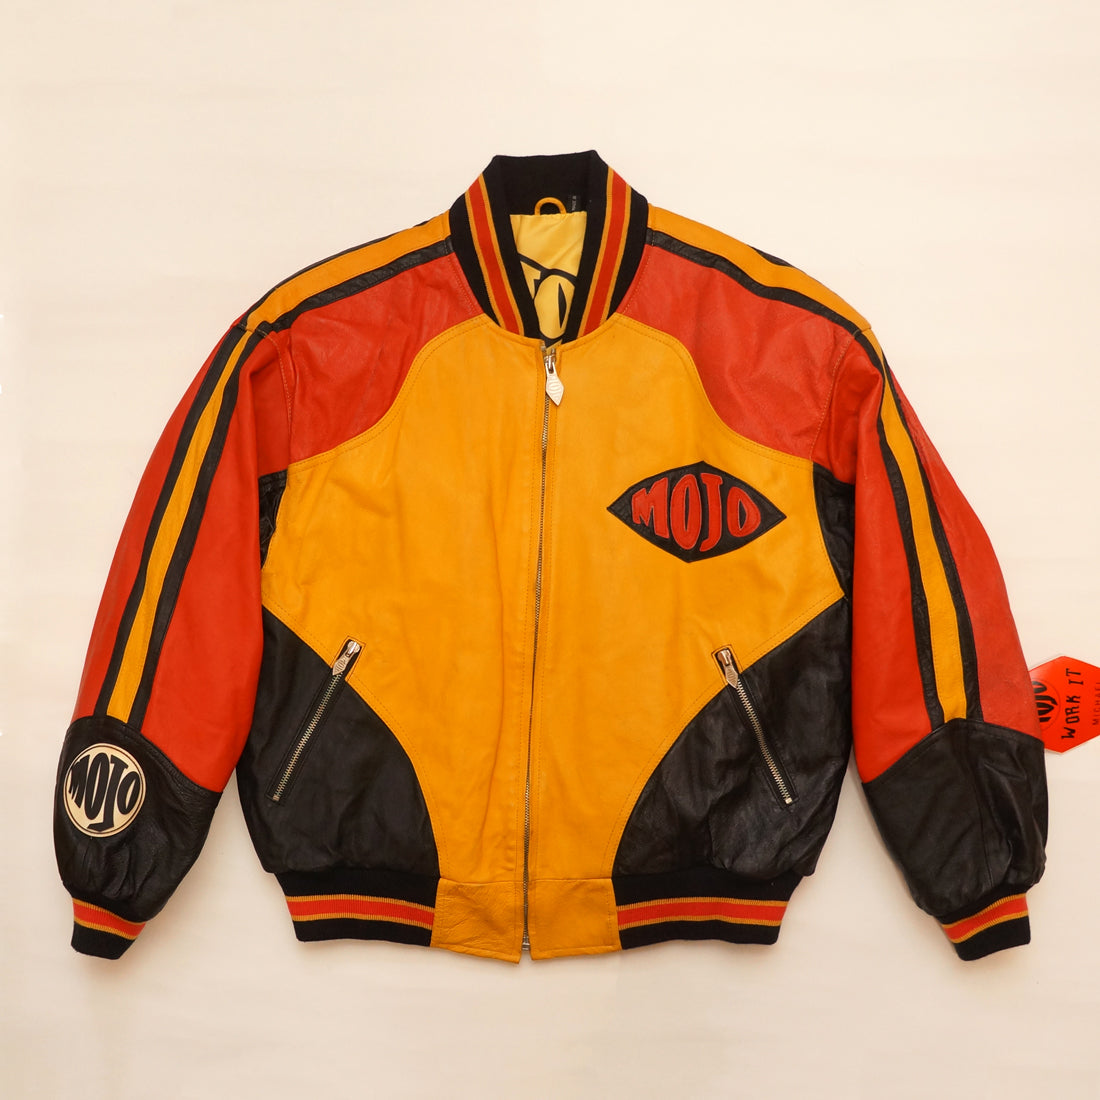 Vintage Leather "MOJO" Jacket By Michael Hoban